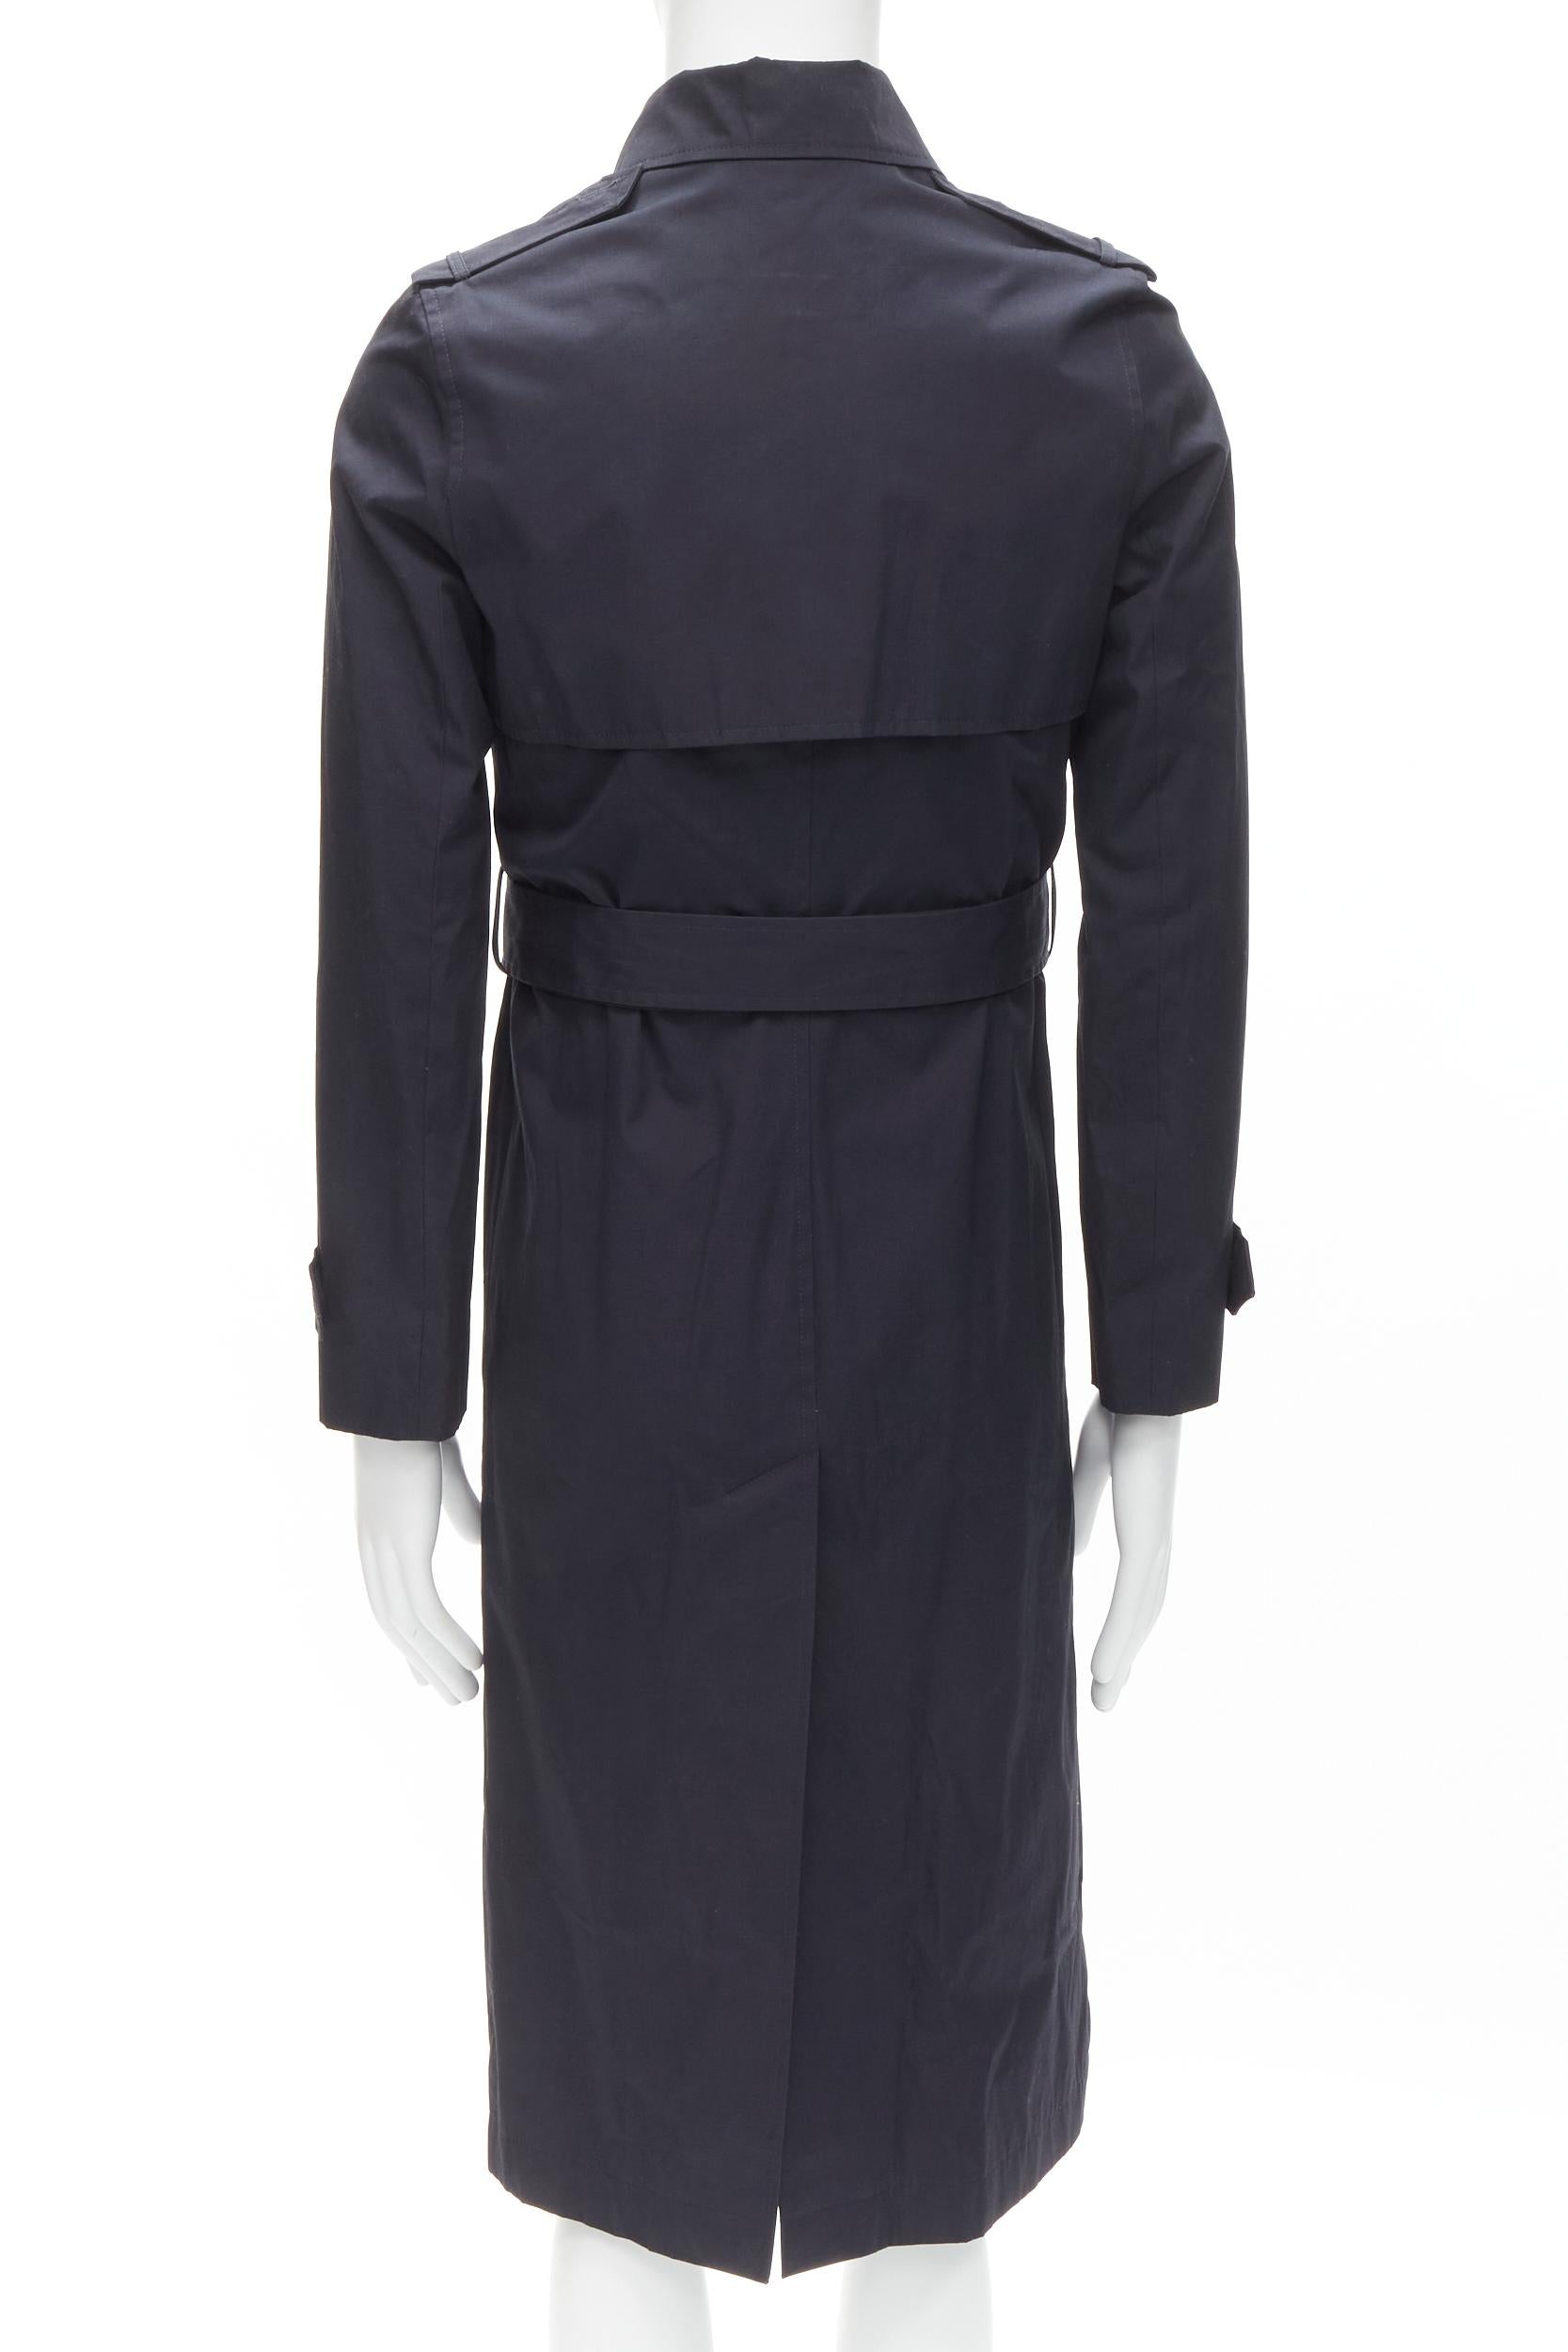 BALENCIAGA DEMNA - Trench-coat en coton bleu marine à boutons fermés et ceinture FR46 S, 2016 1